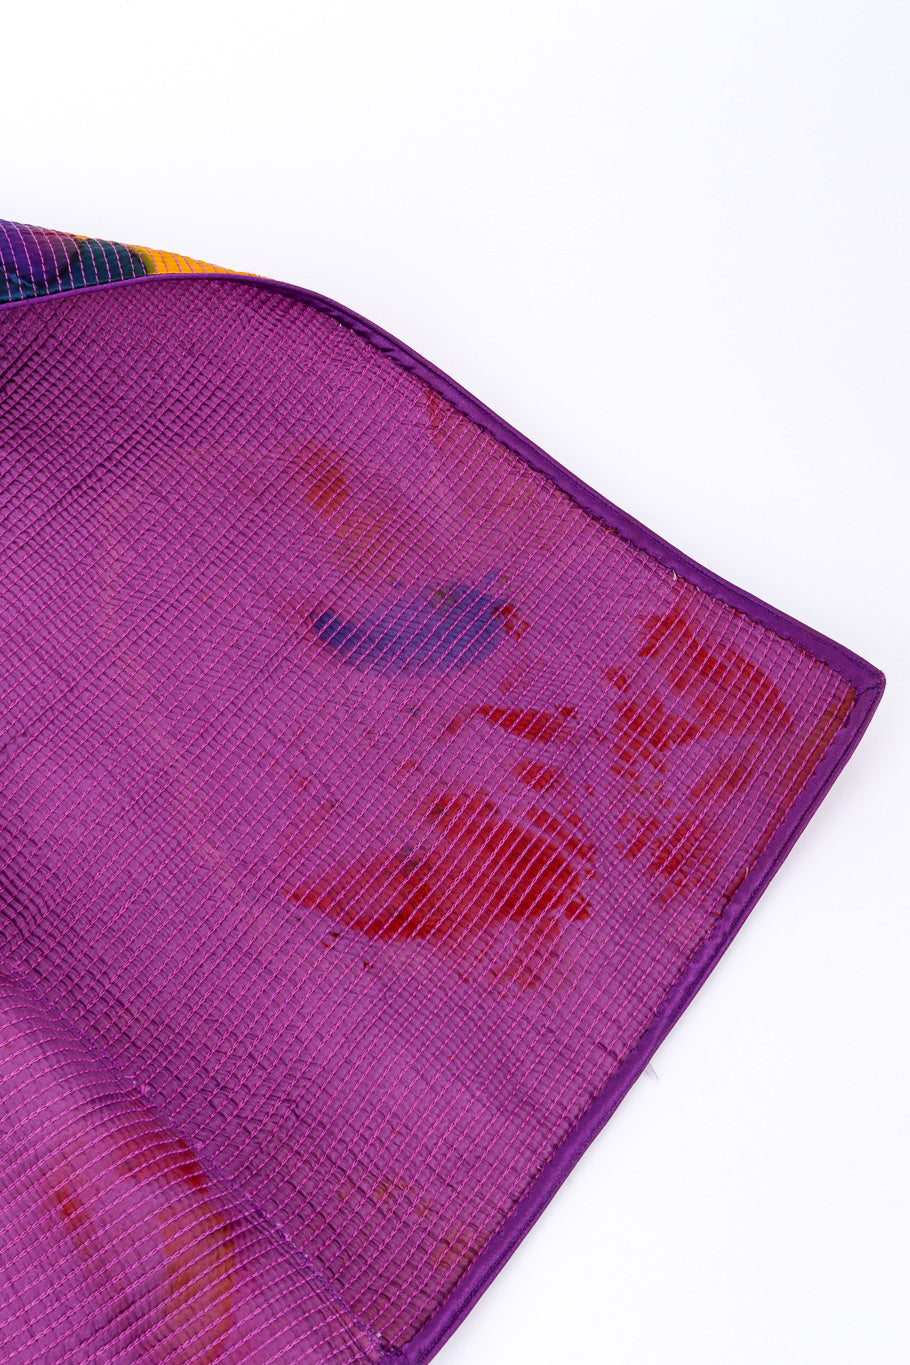 Vintage Mary McFadden Quilted Silk Splotch Jacket water stain closeup @recessla